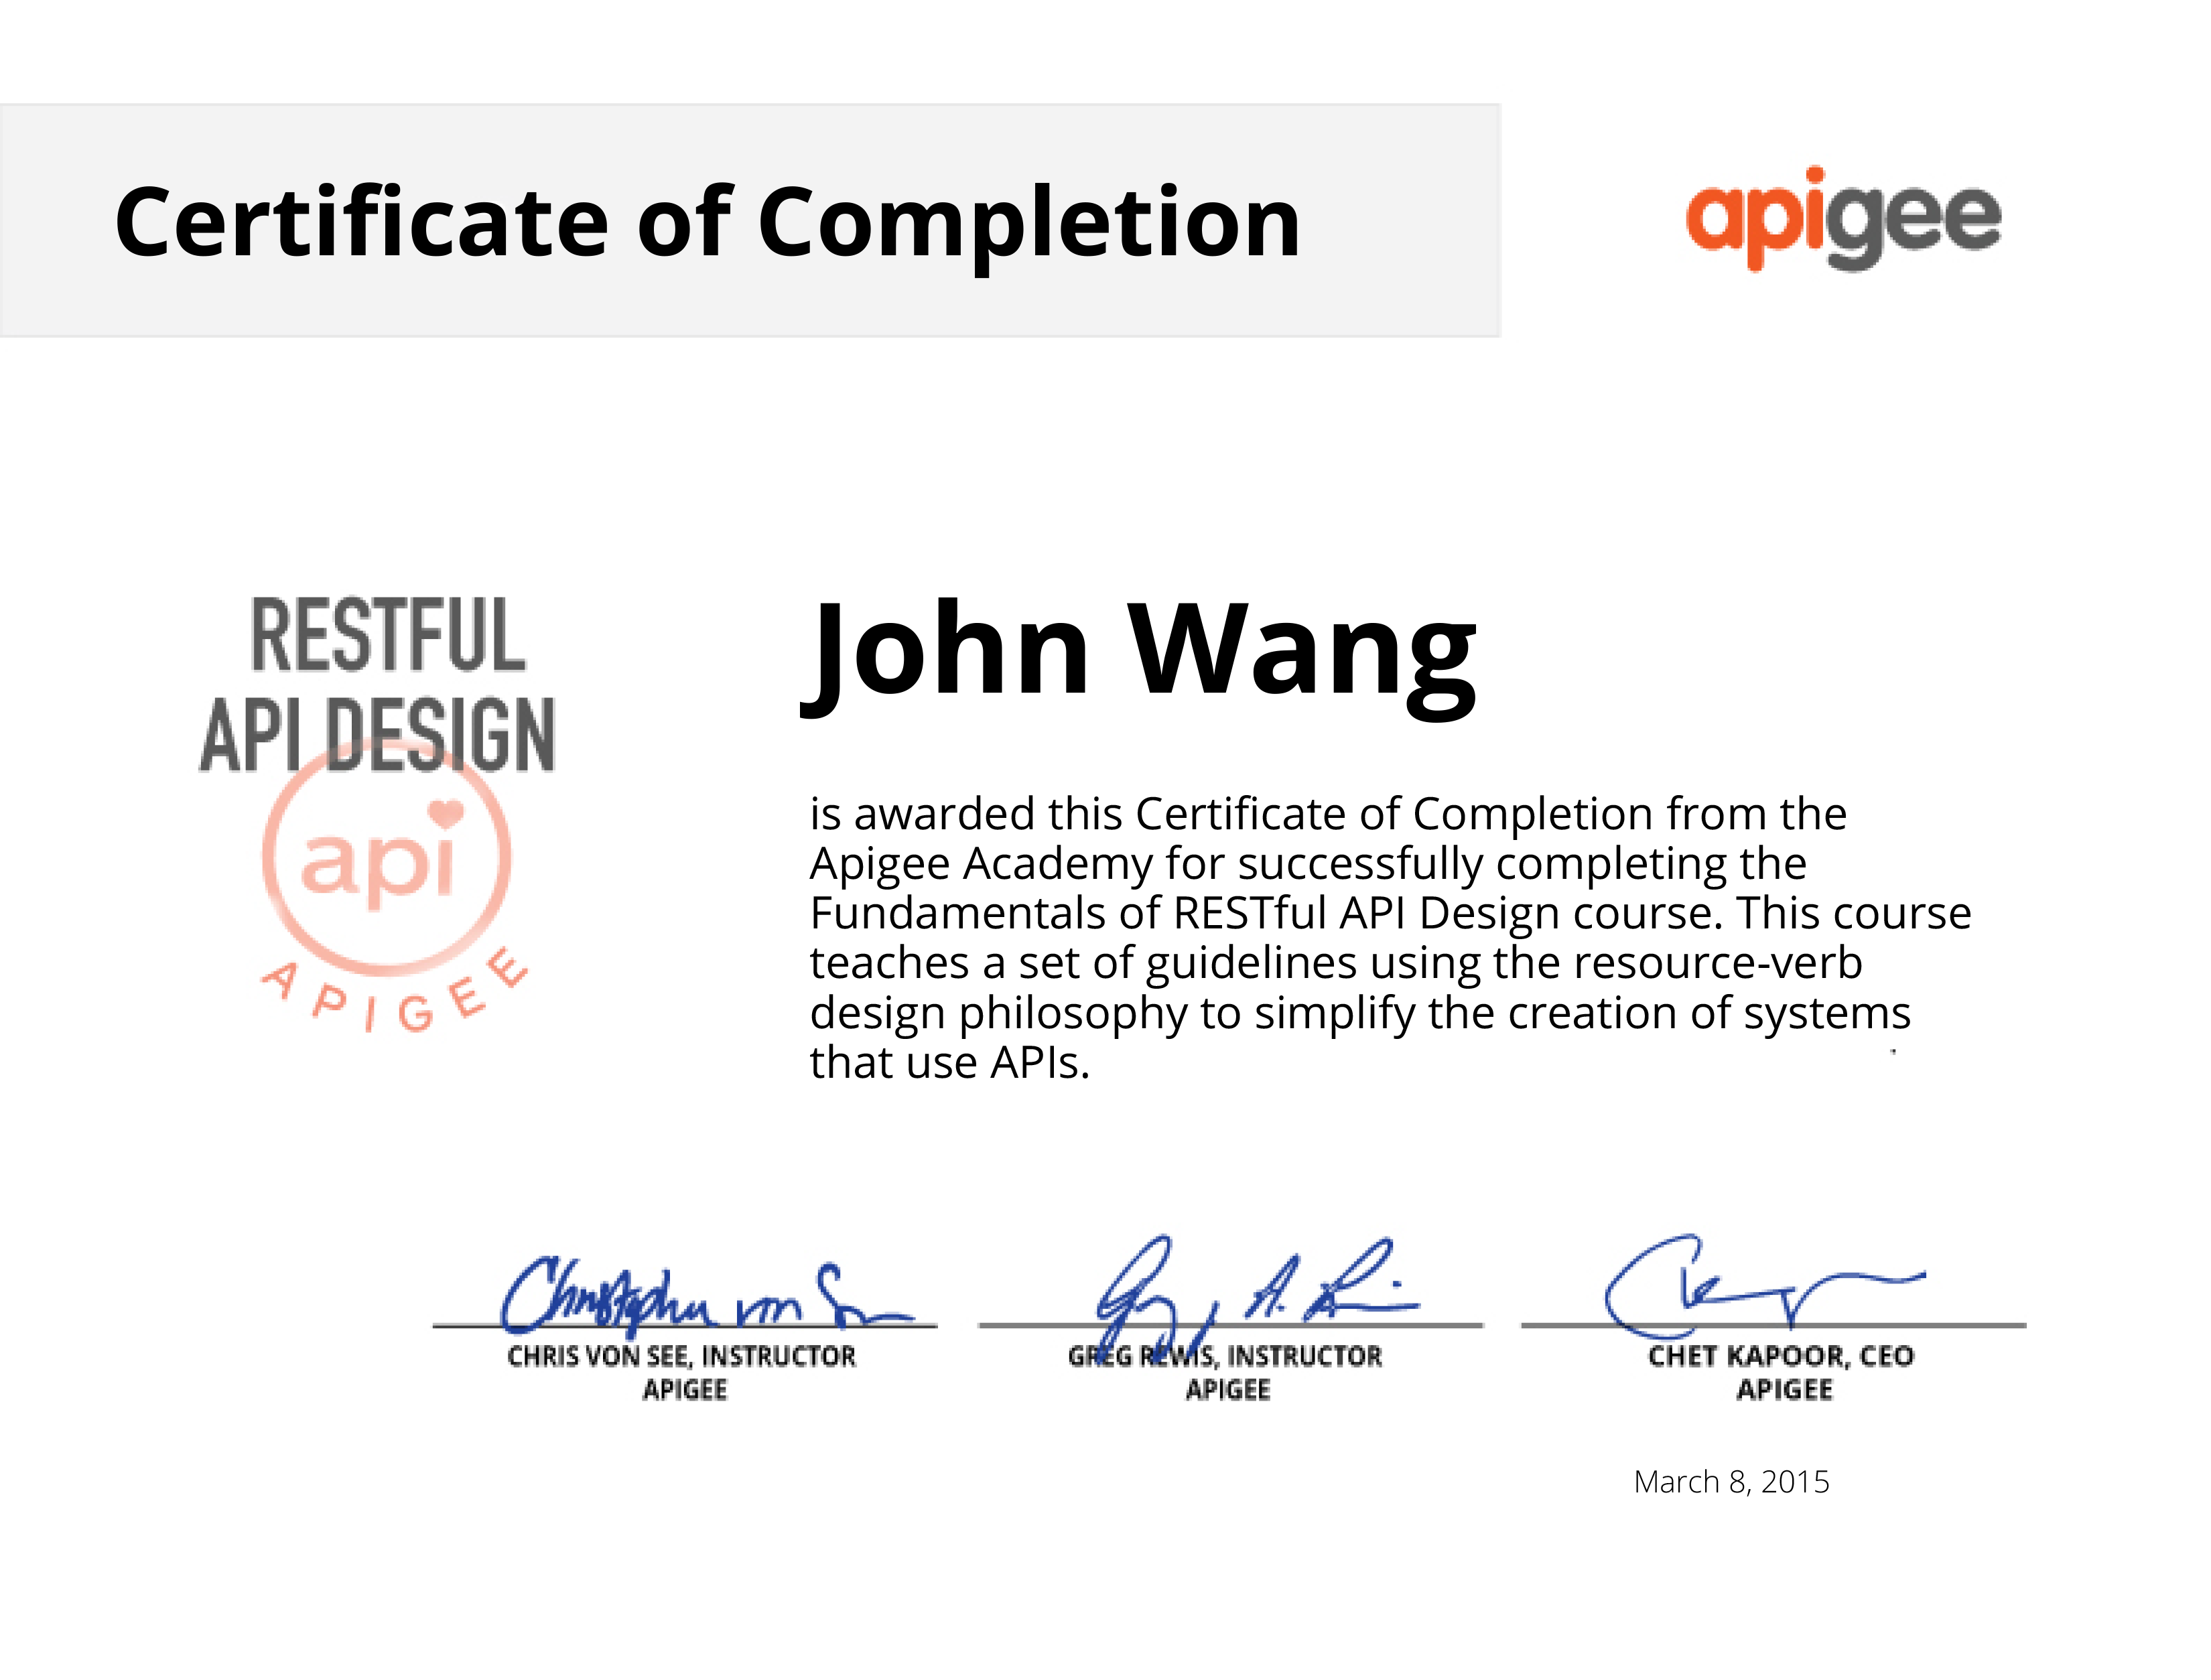 John's Fundamentals of RESTful API Design from Apigee